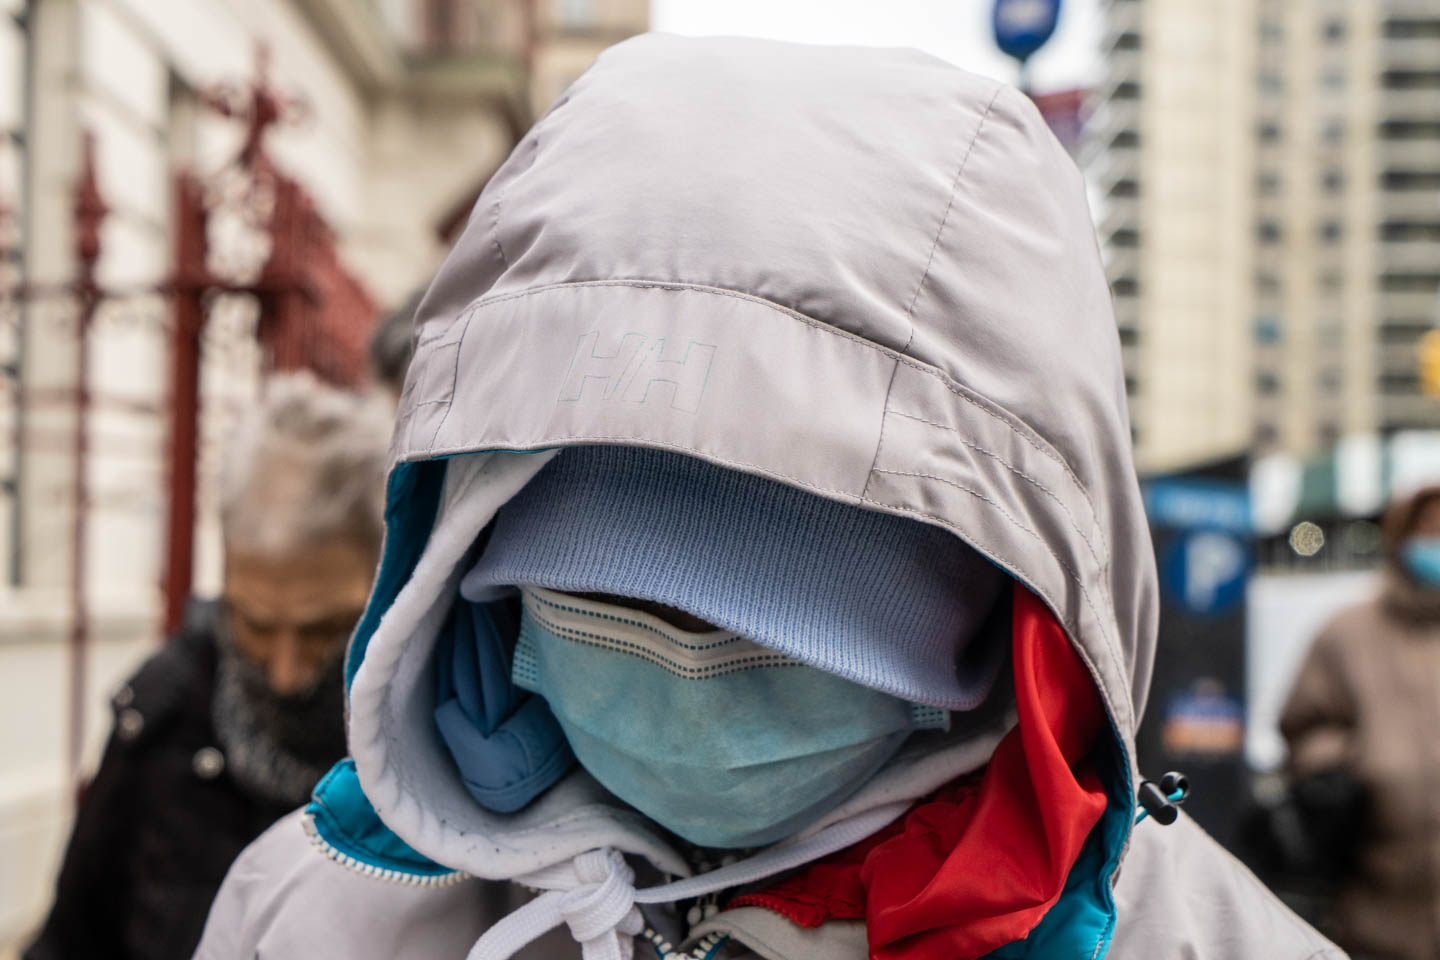 November 17, 2020: Masked person waiting for free food. International Pentecostal Church on West 179th Street, New York, New York. © Camilo José Vergara